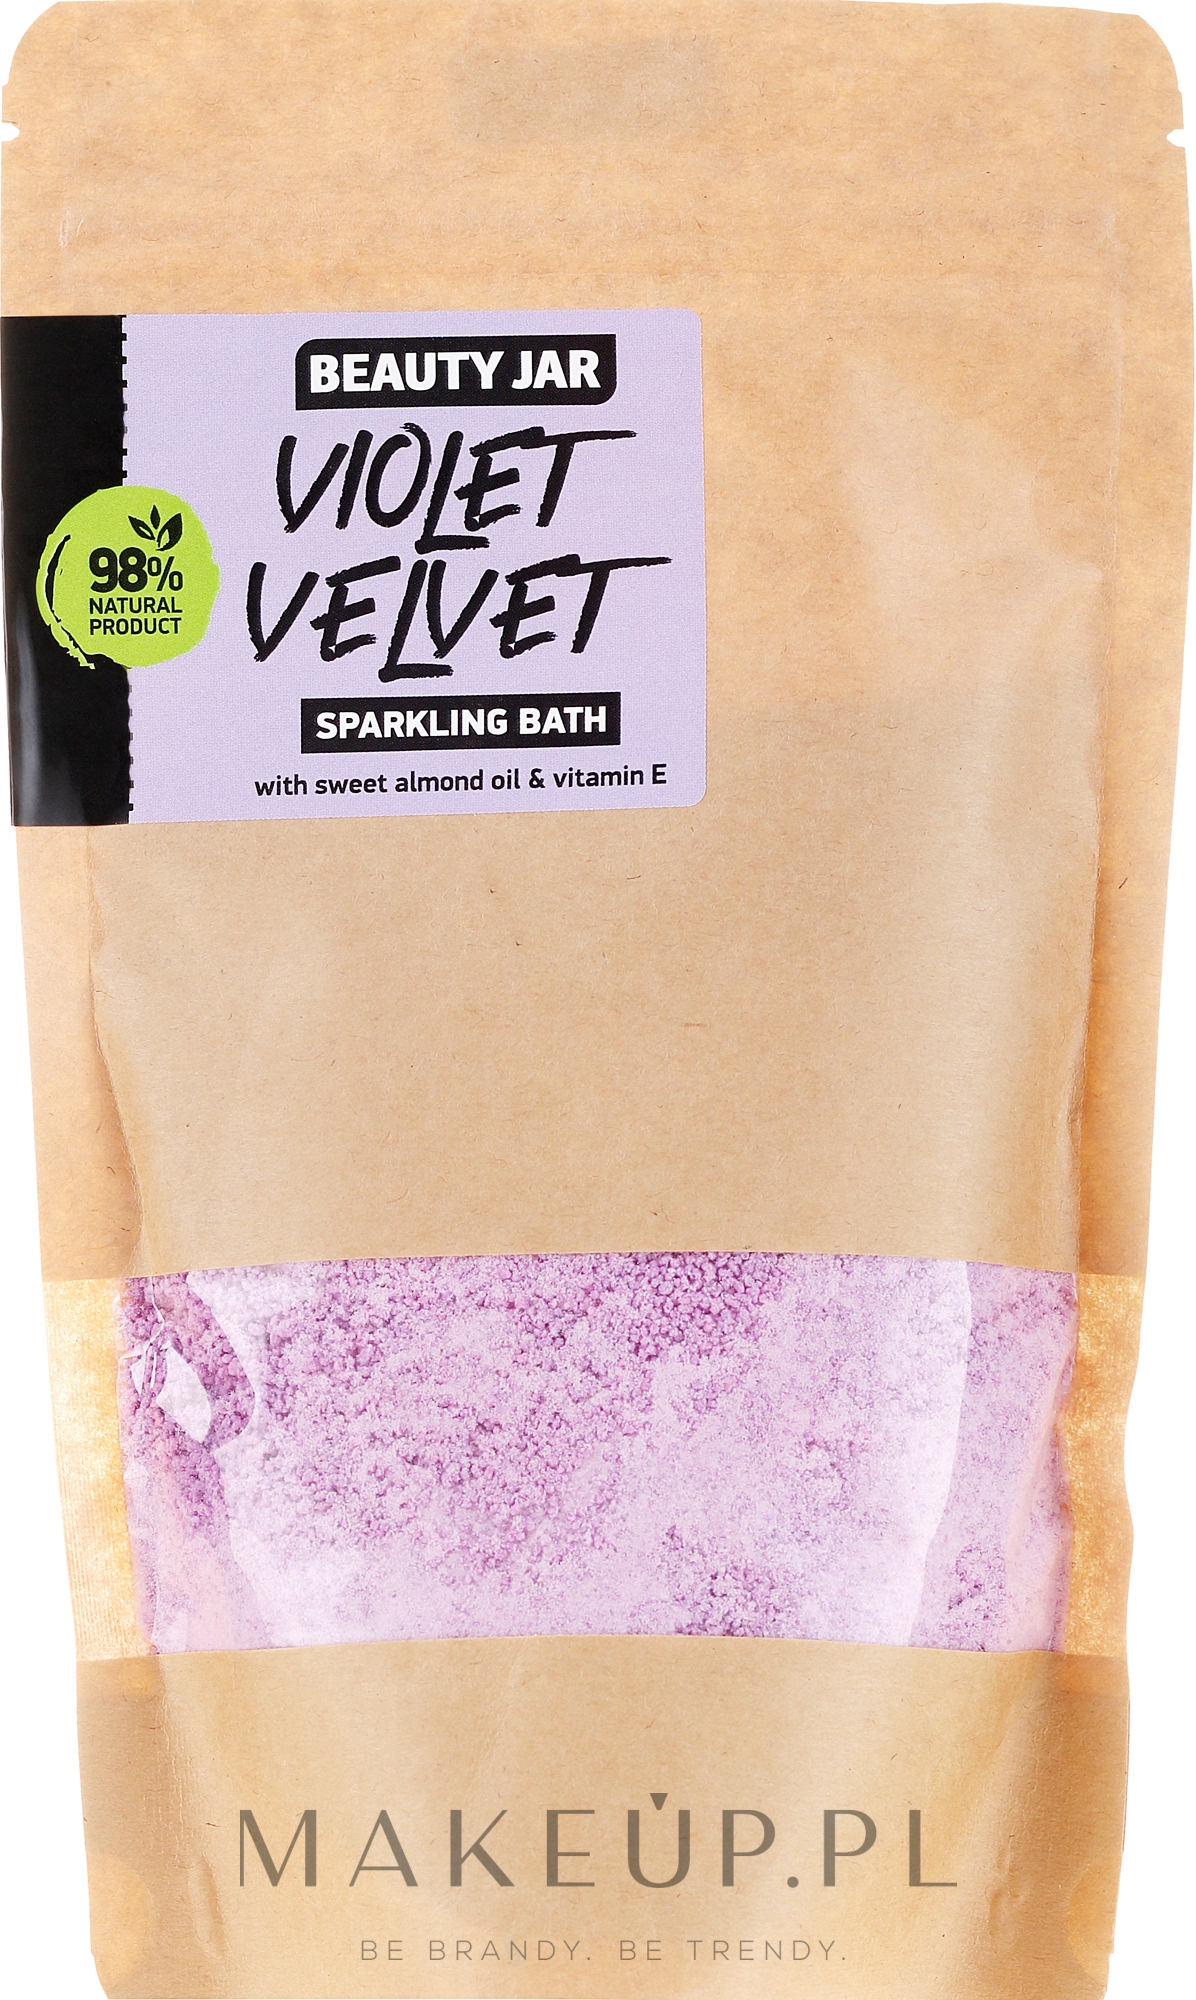 Puder do kąpieli Fioletowy aksamit - Beauty Jar Sparkling Bath Violet Velvet — Zdjęcie 250 g